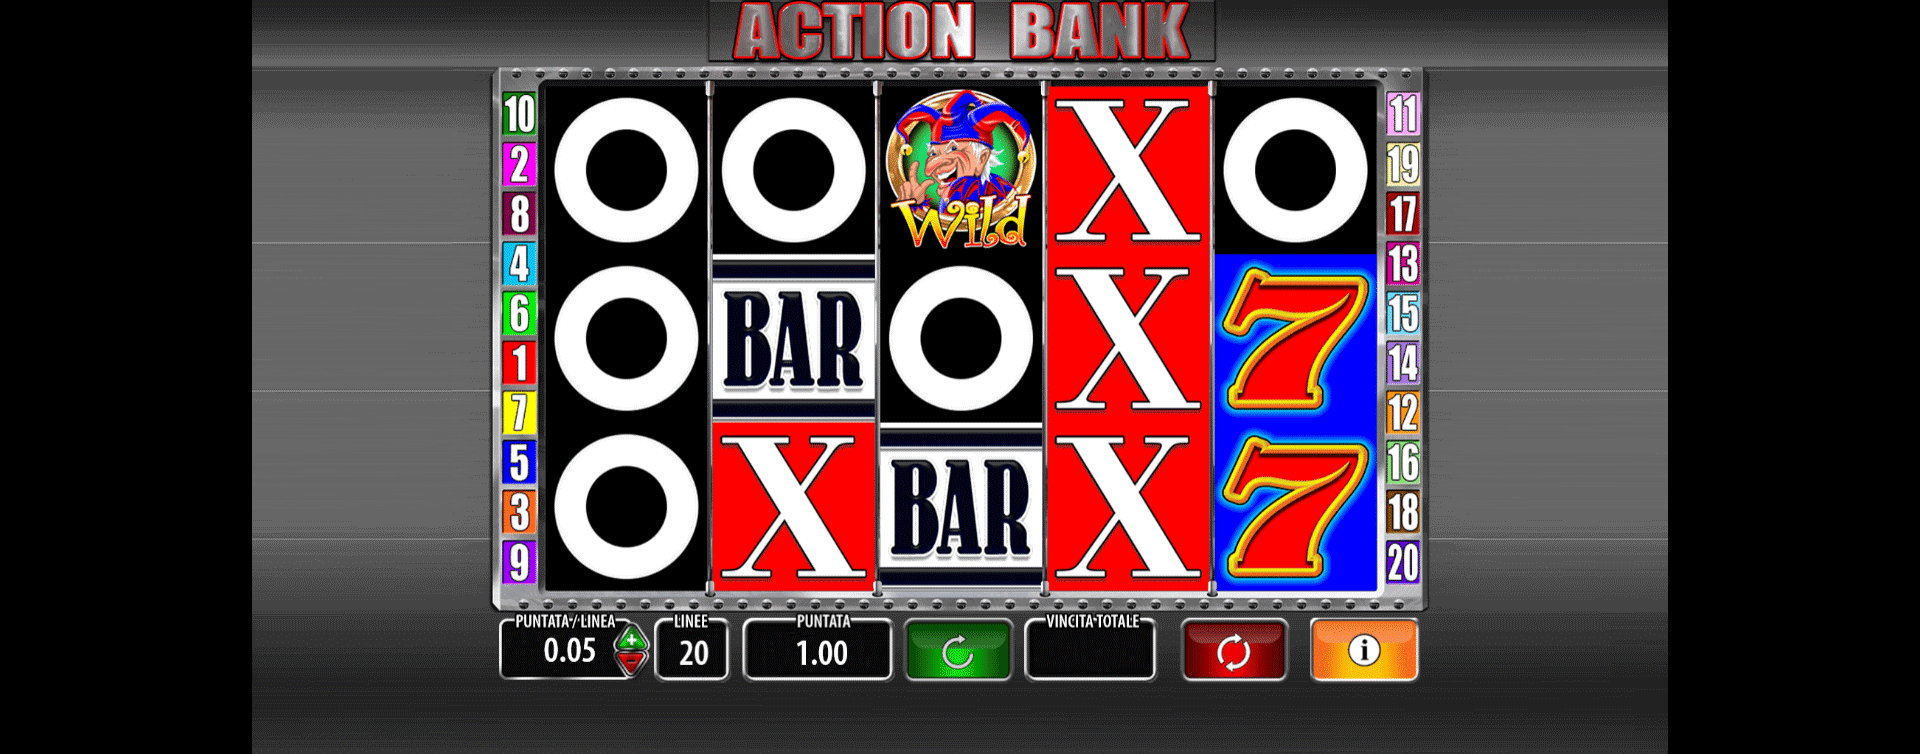 griglia slot machine action bank